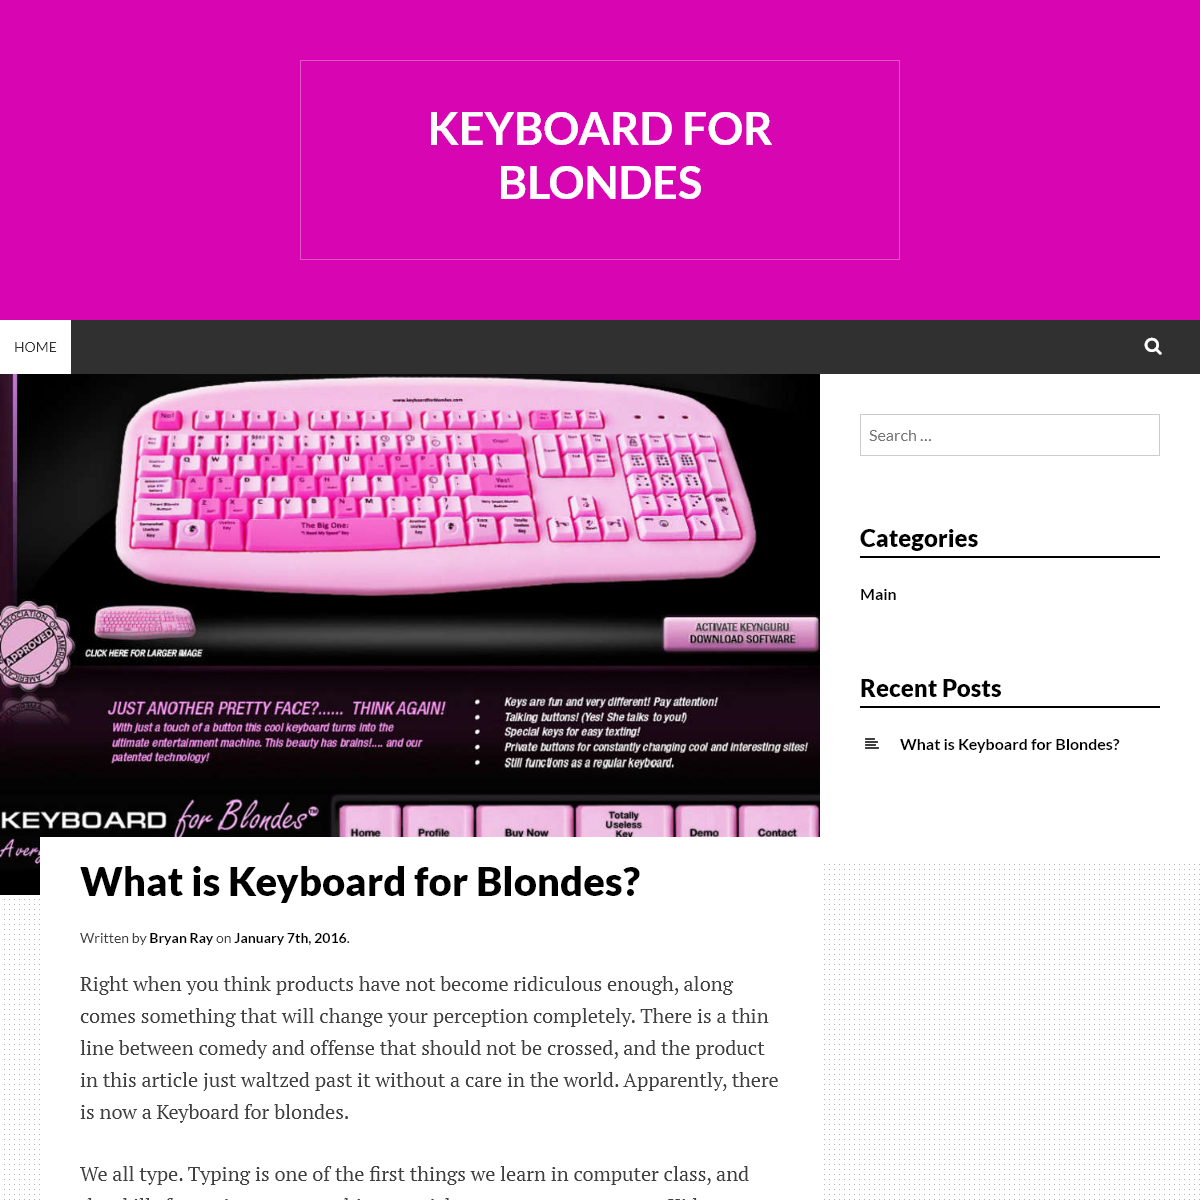 A complete backup of keyboardforblondes.com